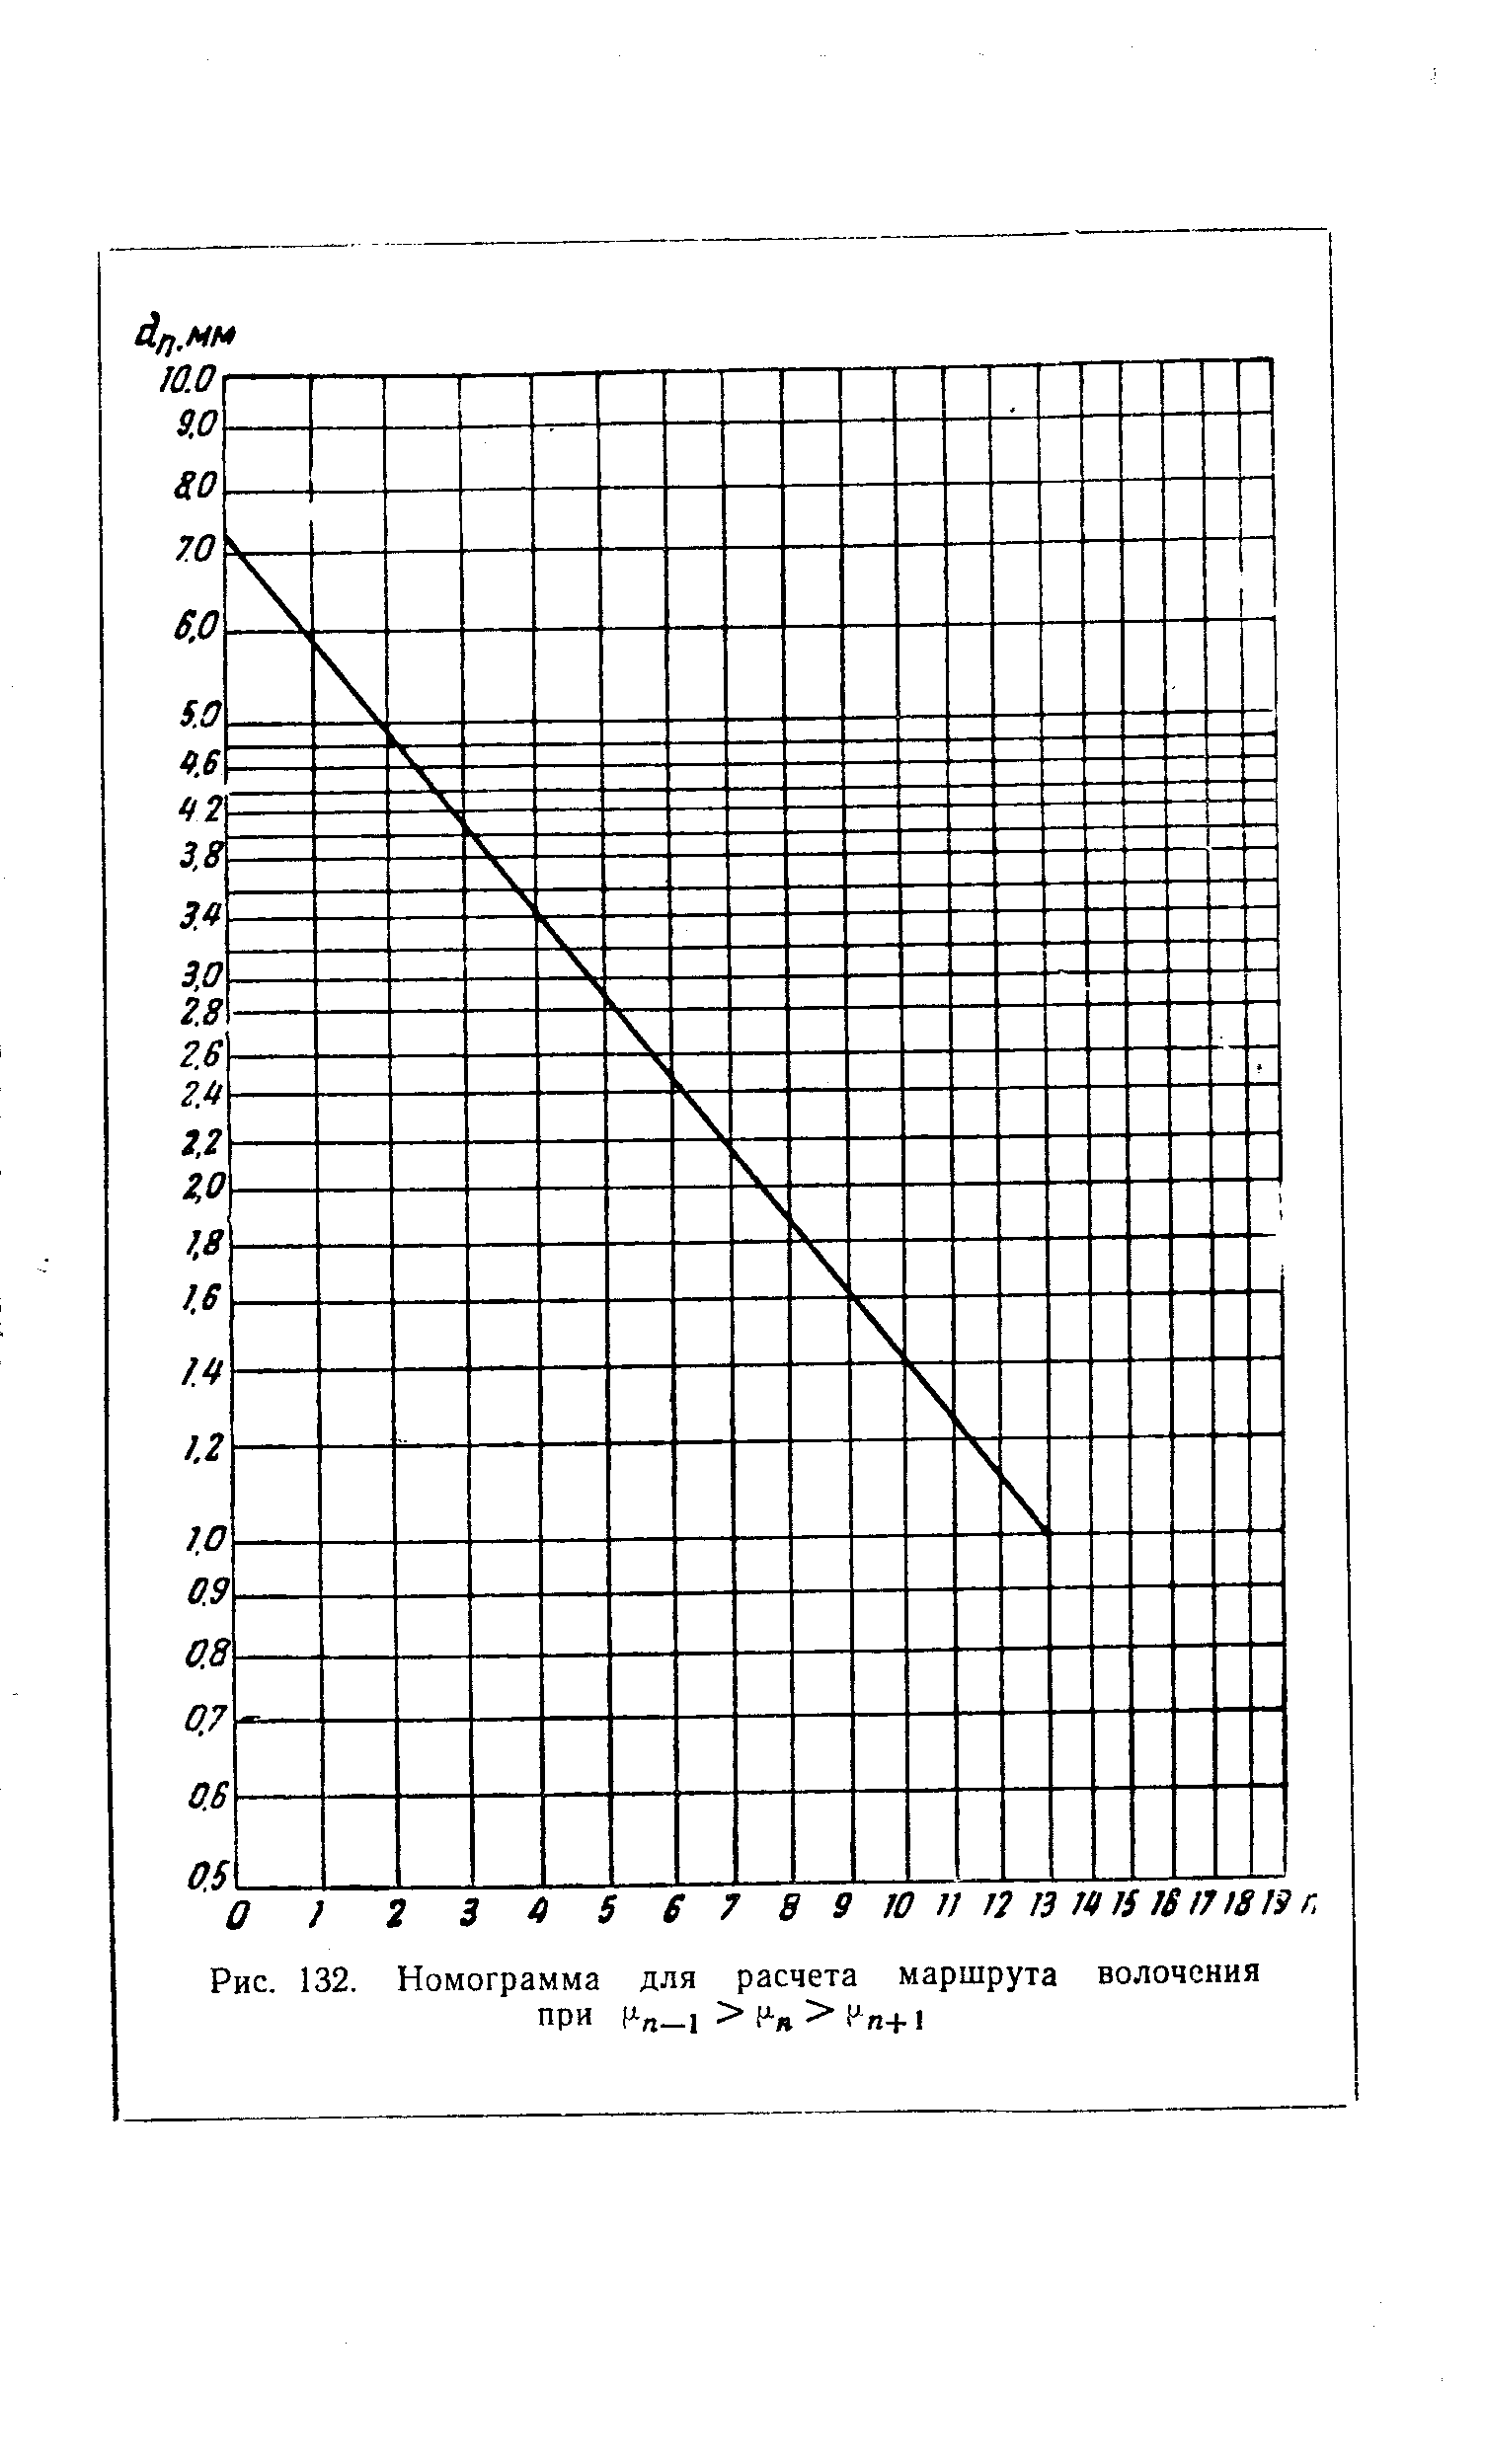 Рис. 132. Номограмма для расчета маршрута волочения при 1 1 > F-я > +1
